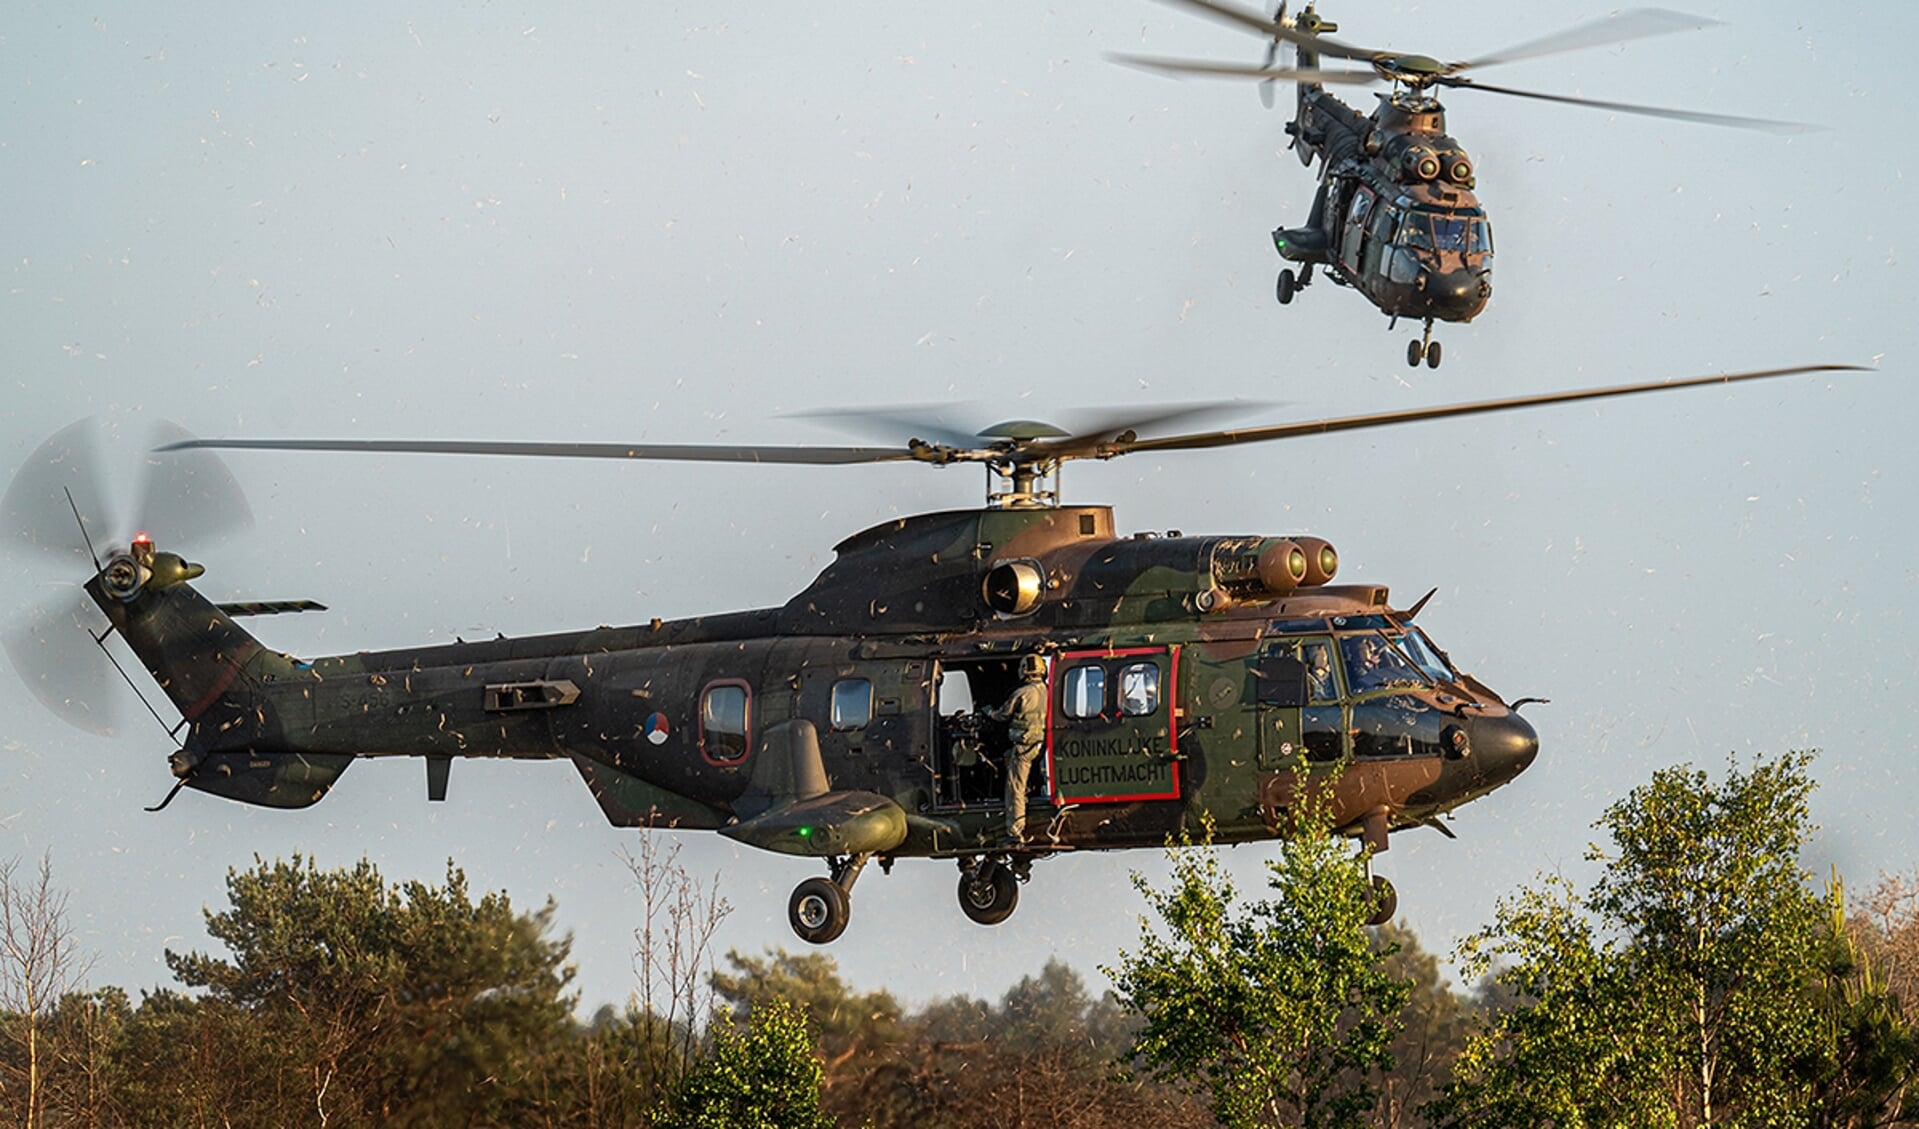 Cougar-transporthelikopters doen mee aan de oefening.